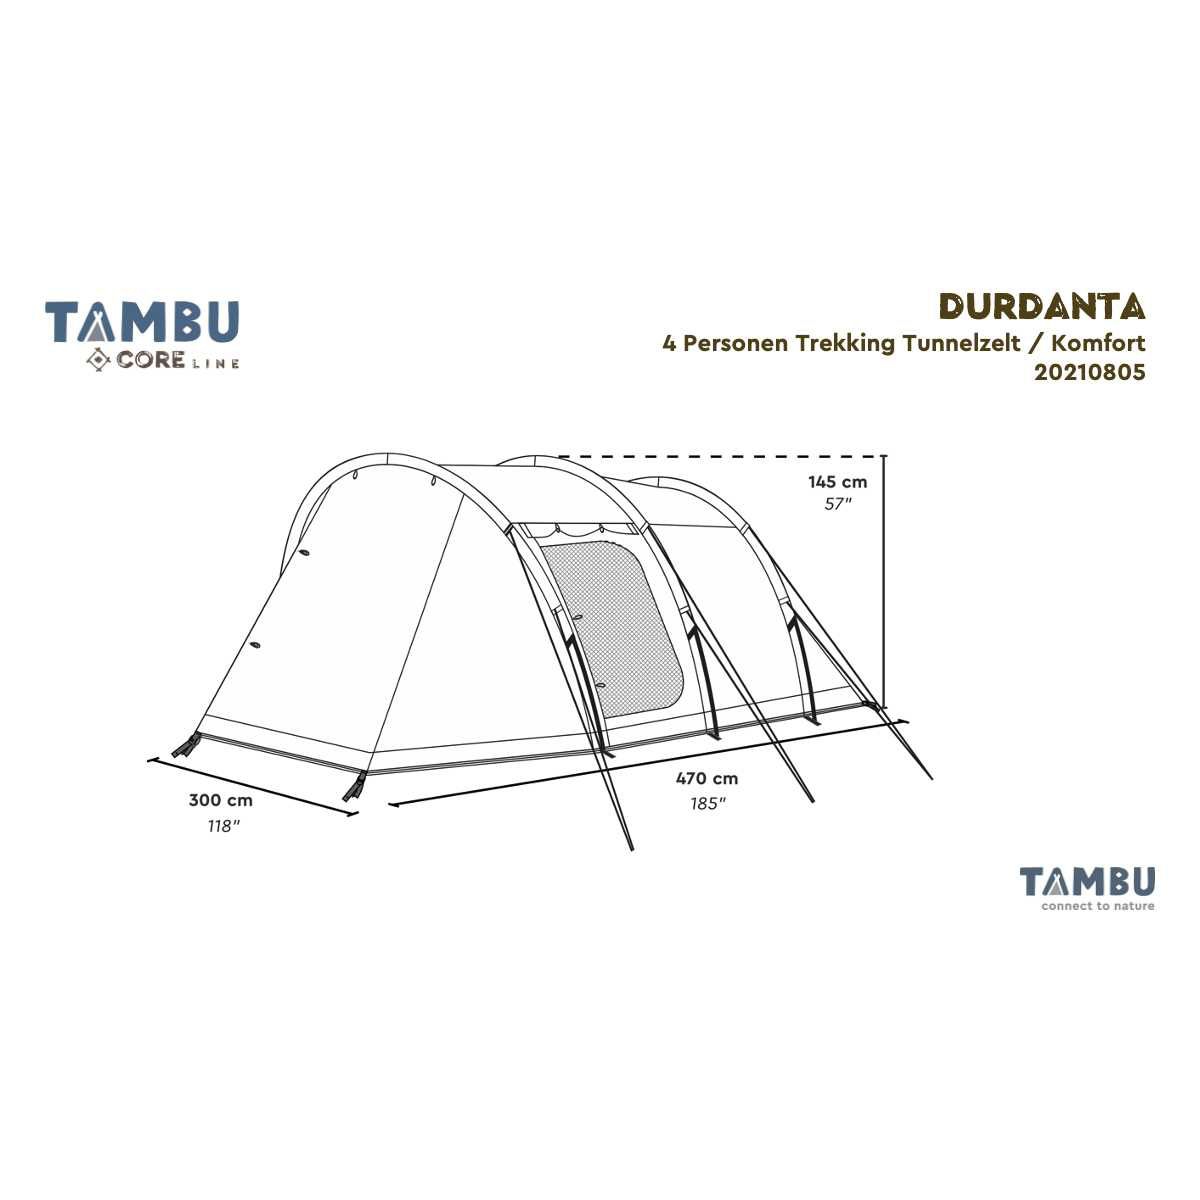 TAMBU DURDANTA Trekking Tunnelzelt Beige 4 Personen - 20210805